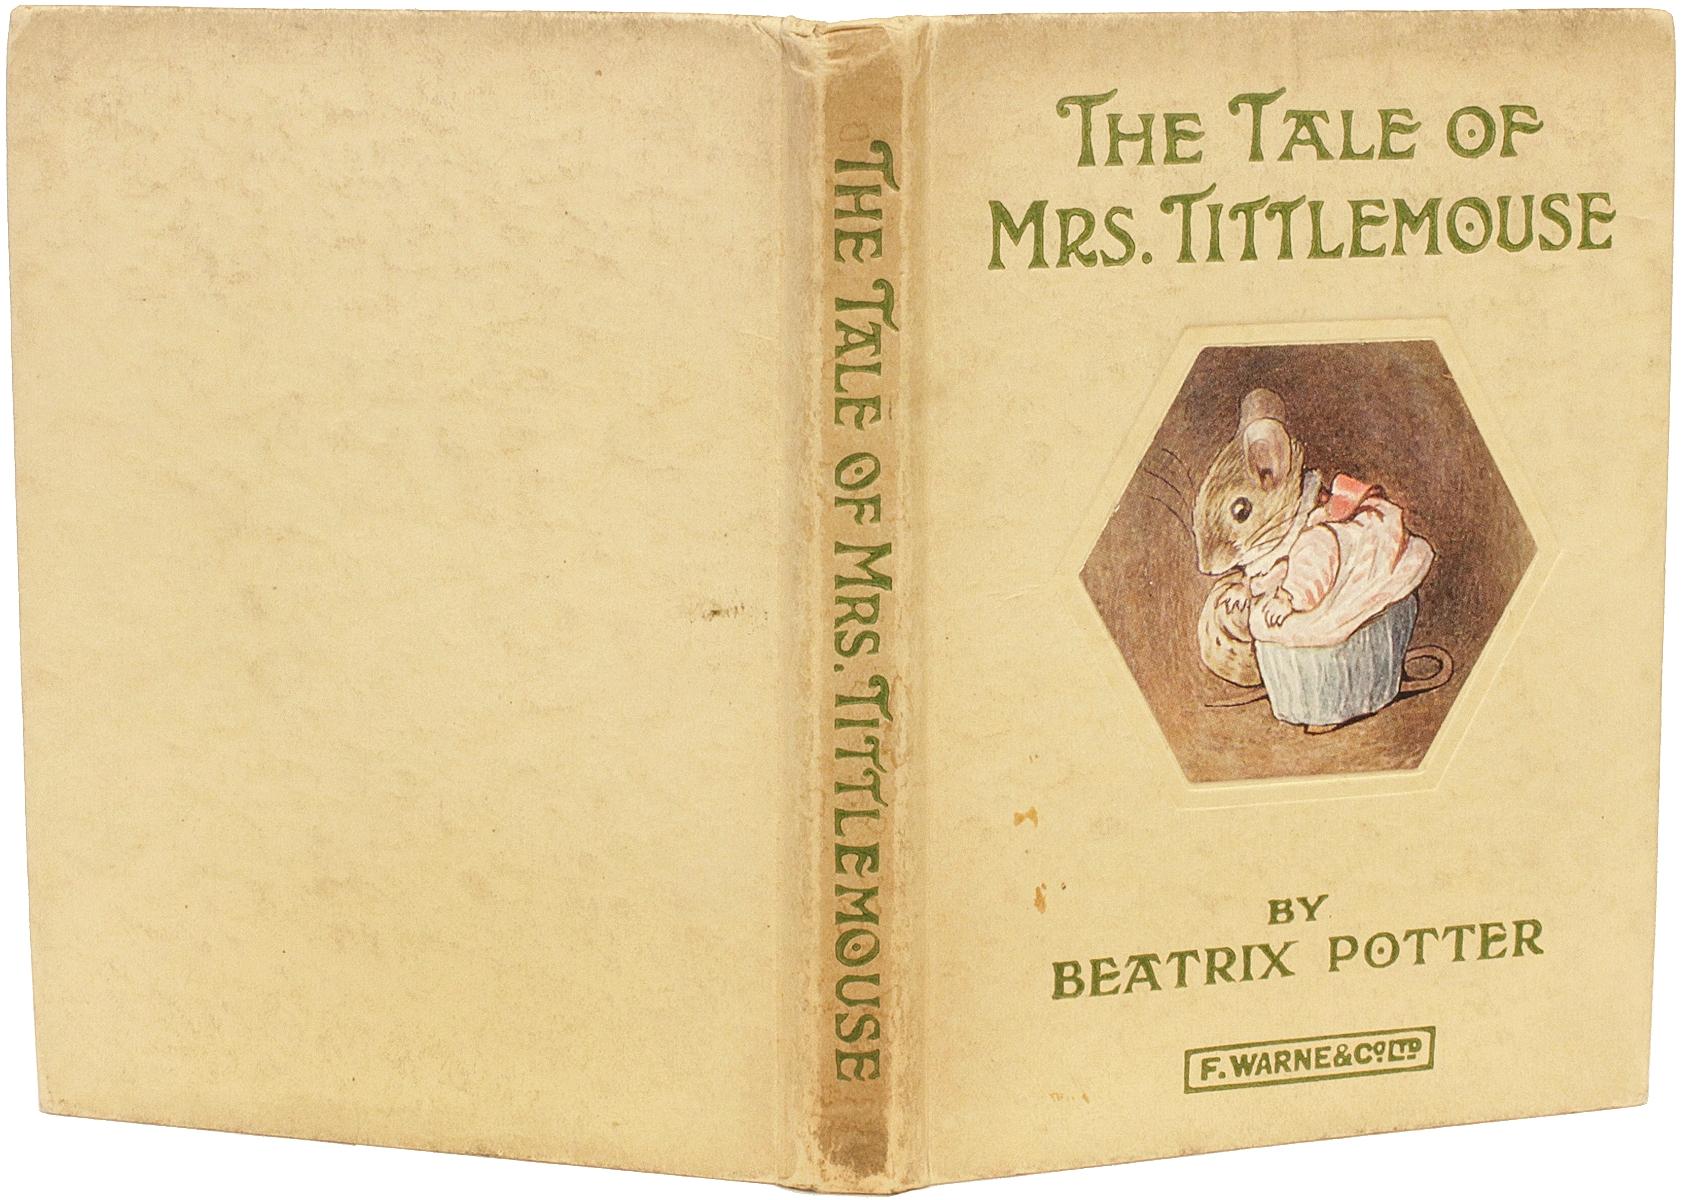 British Beatrix Potter, The Tale of Mrs. Tittlemouse, Presentation Copy For Sale